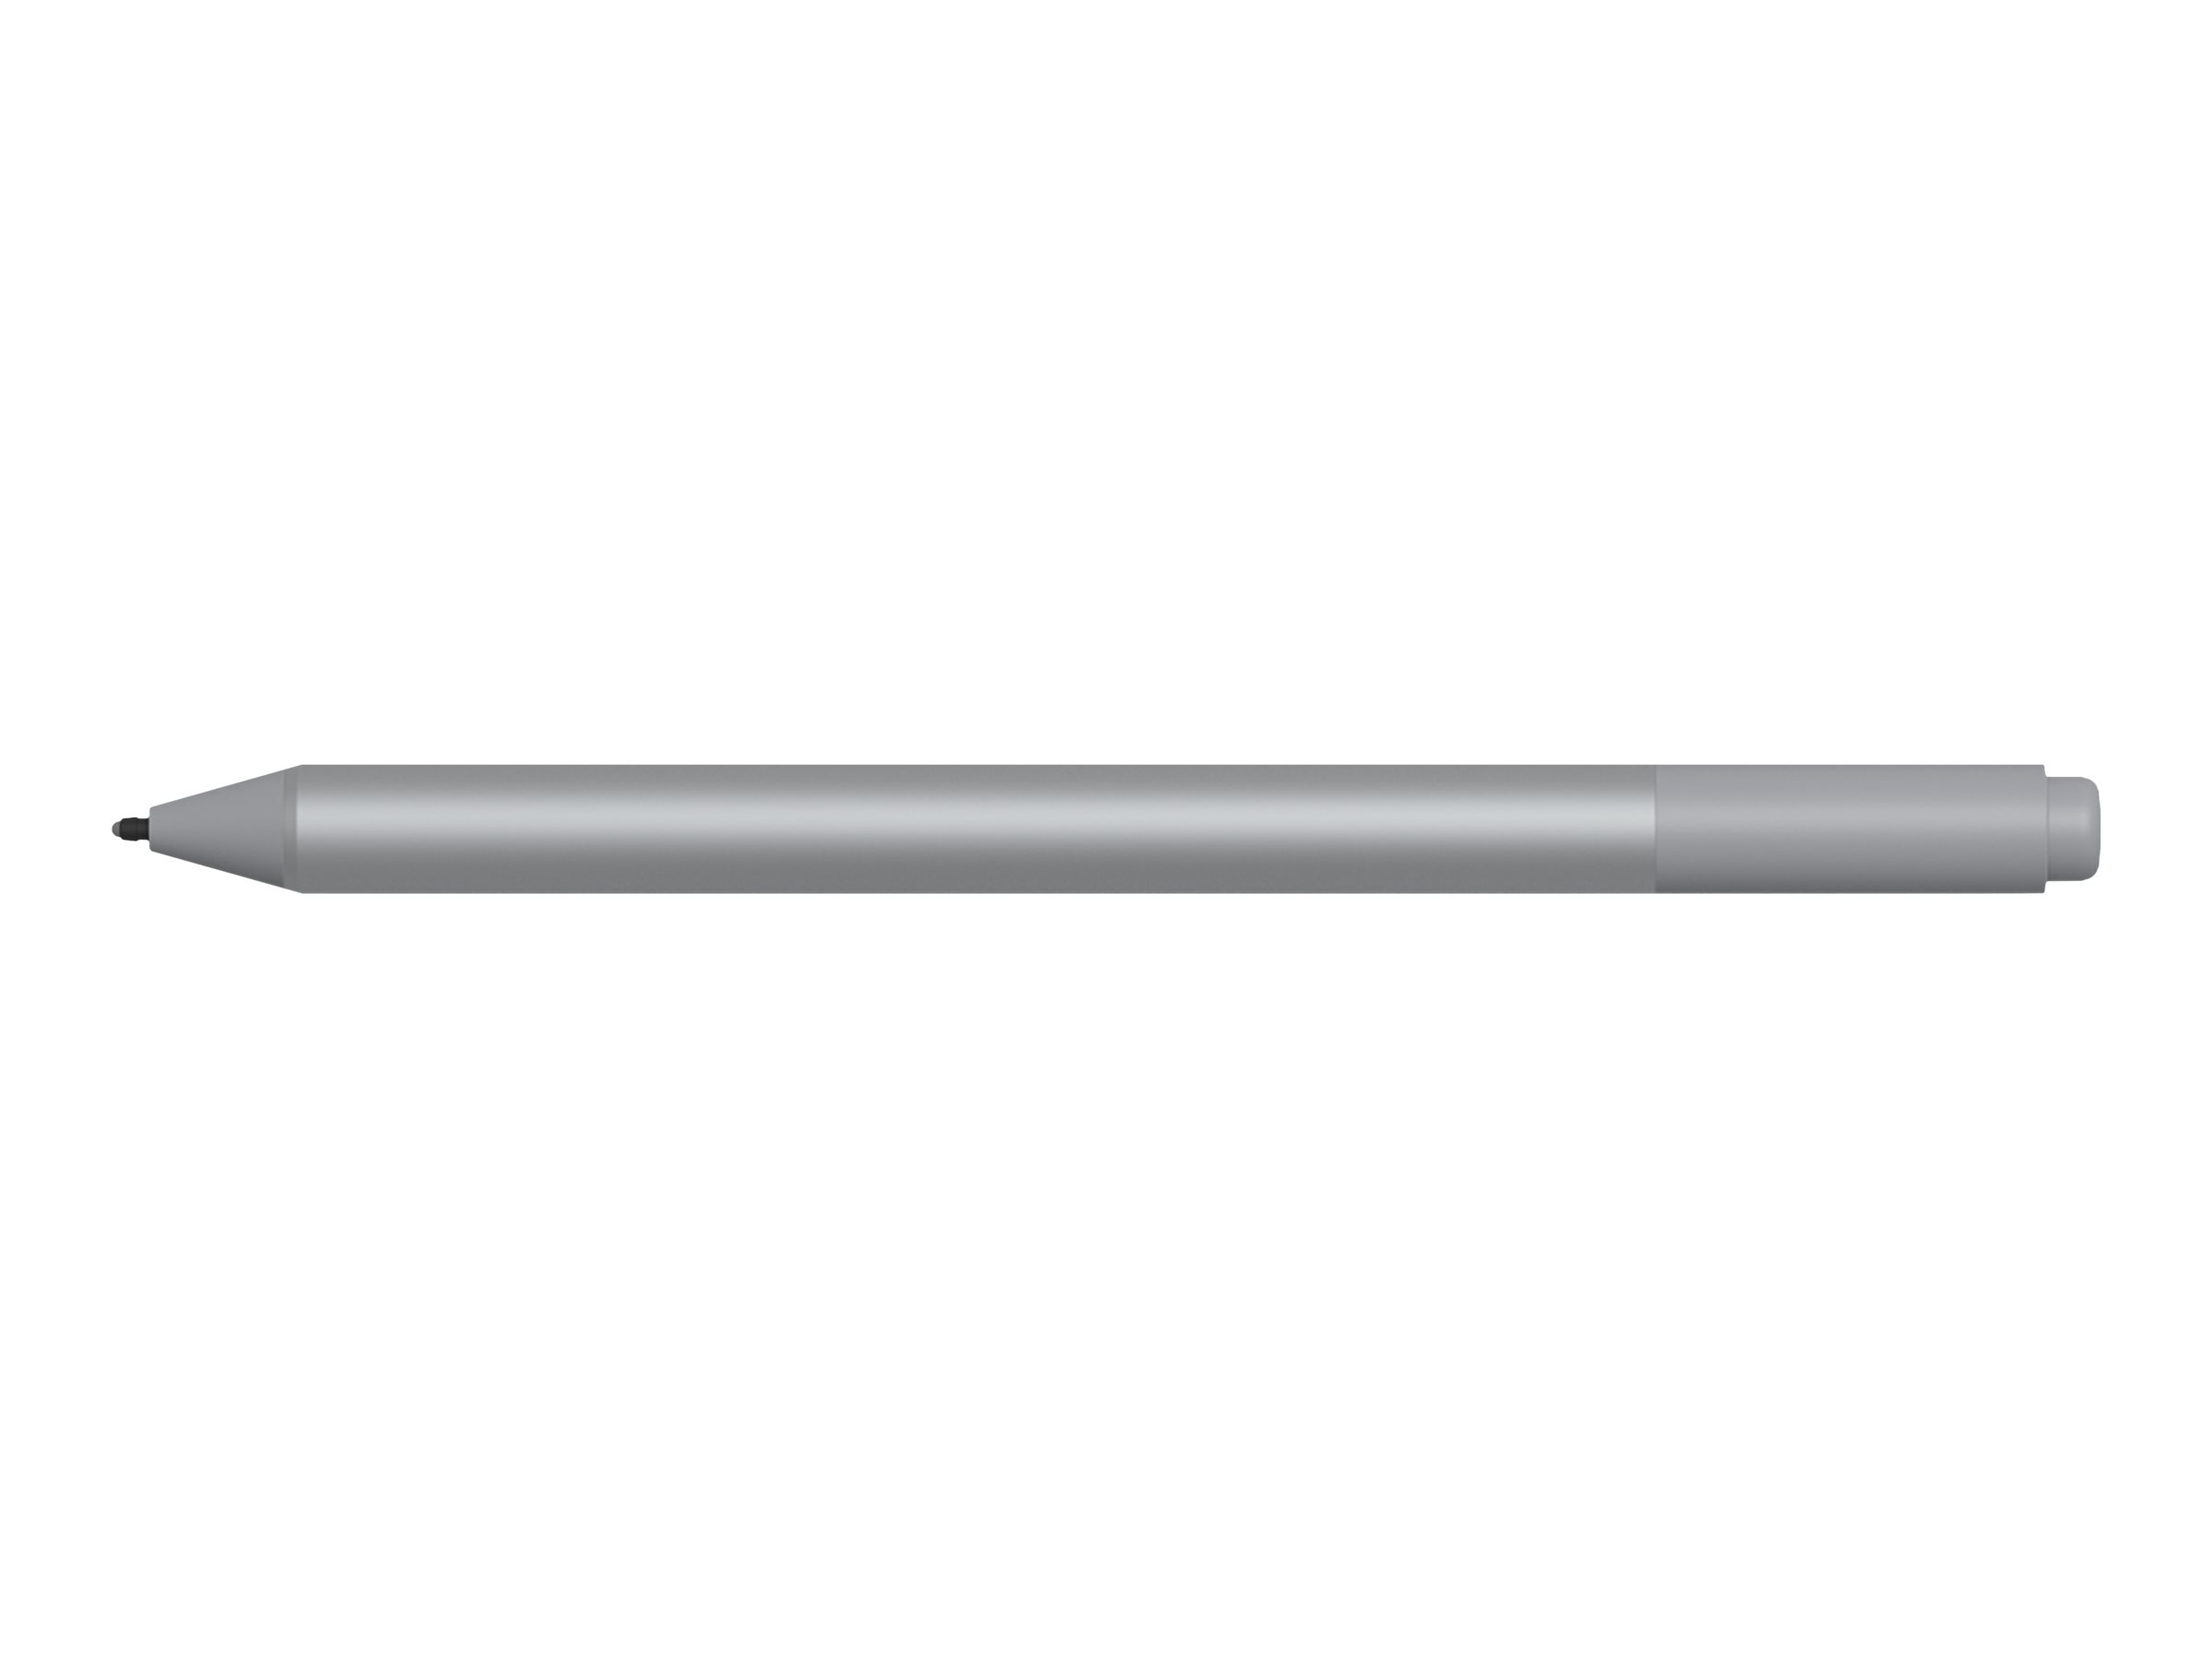 Microsoft Surface Pen M1776 - Aktiver Stylus - 2 Tasten - Bluetooth 4.0 - Platin - kommerziell